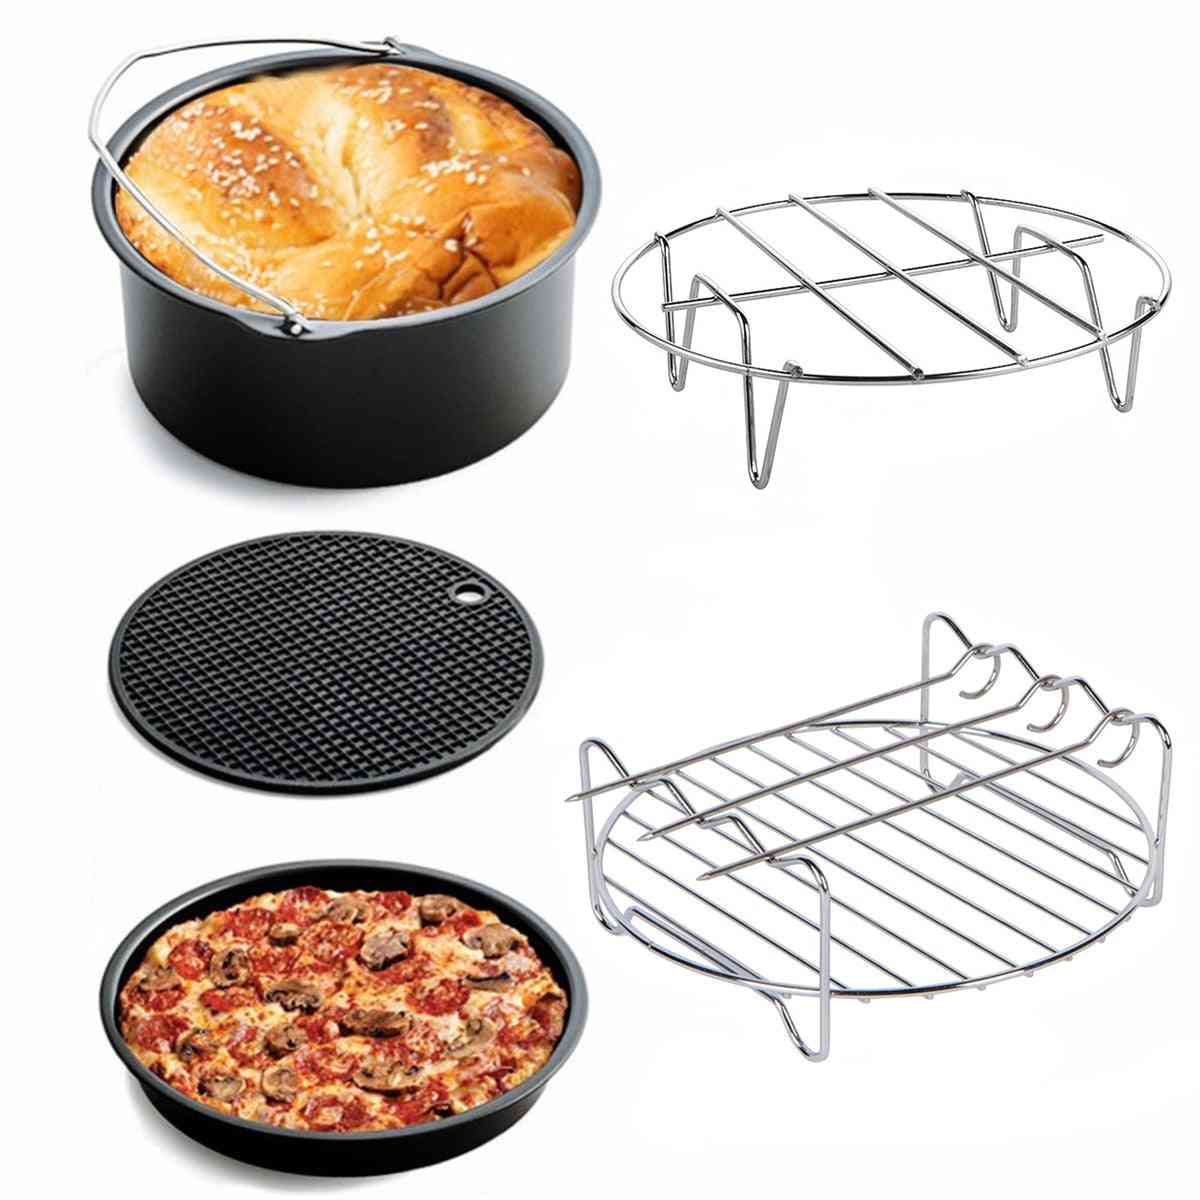 Accesorios para freidora de aire jaula para pastel / pizza marco de cocción al vapor almohadilla de aislamiento de parrilla